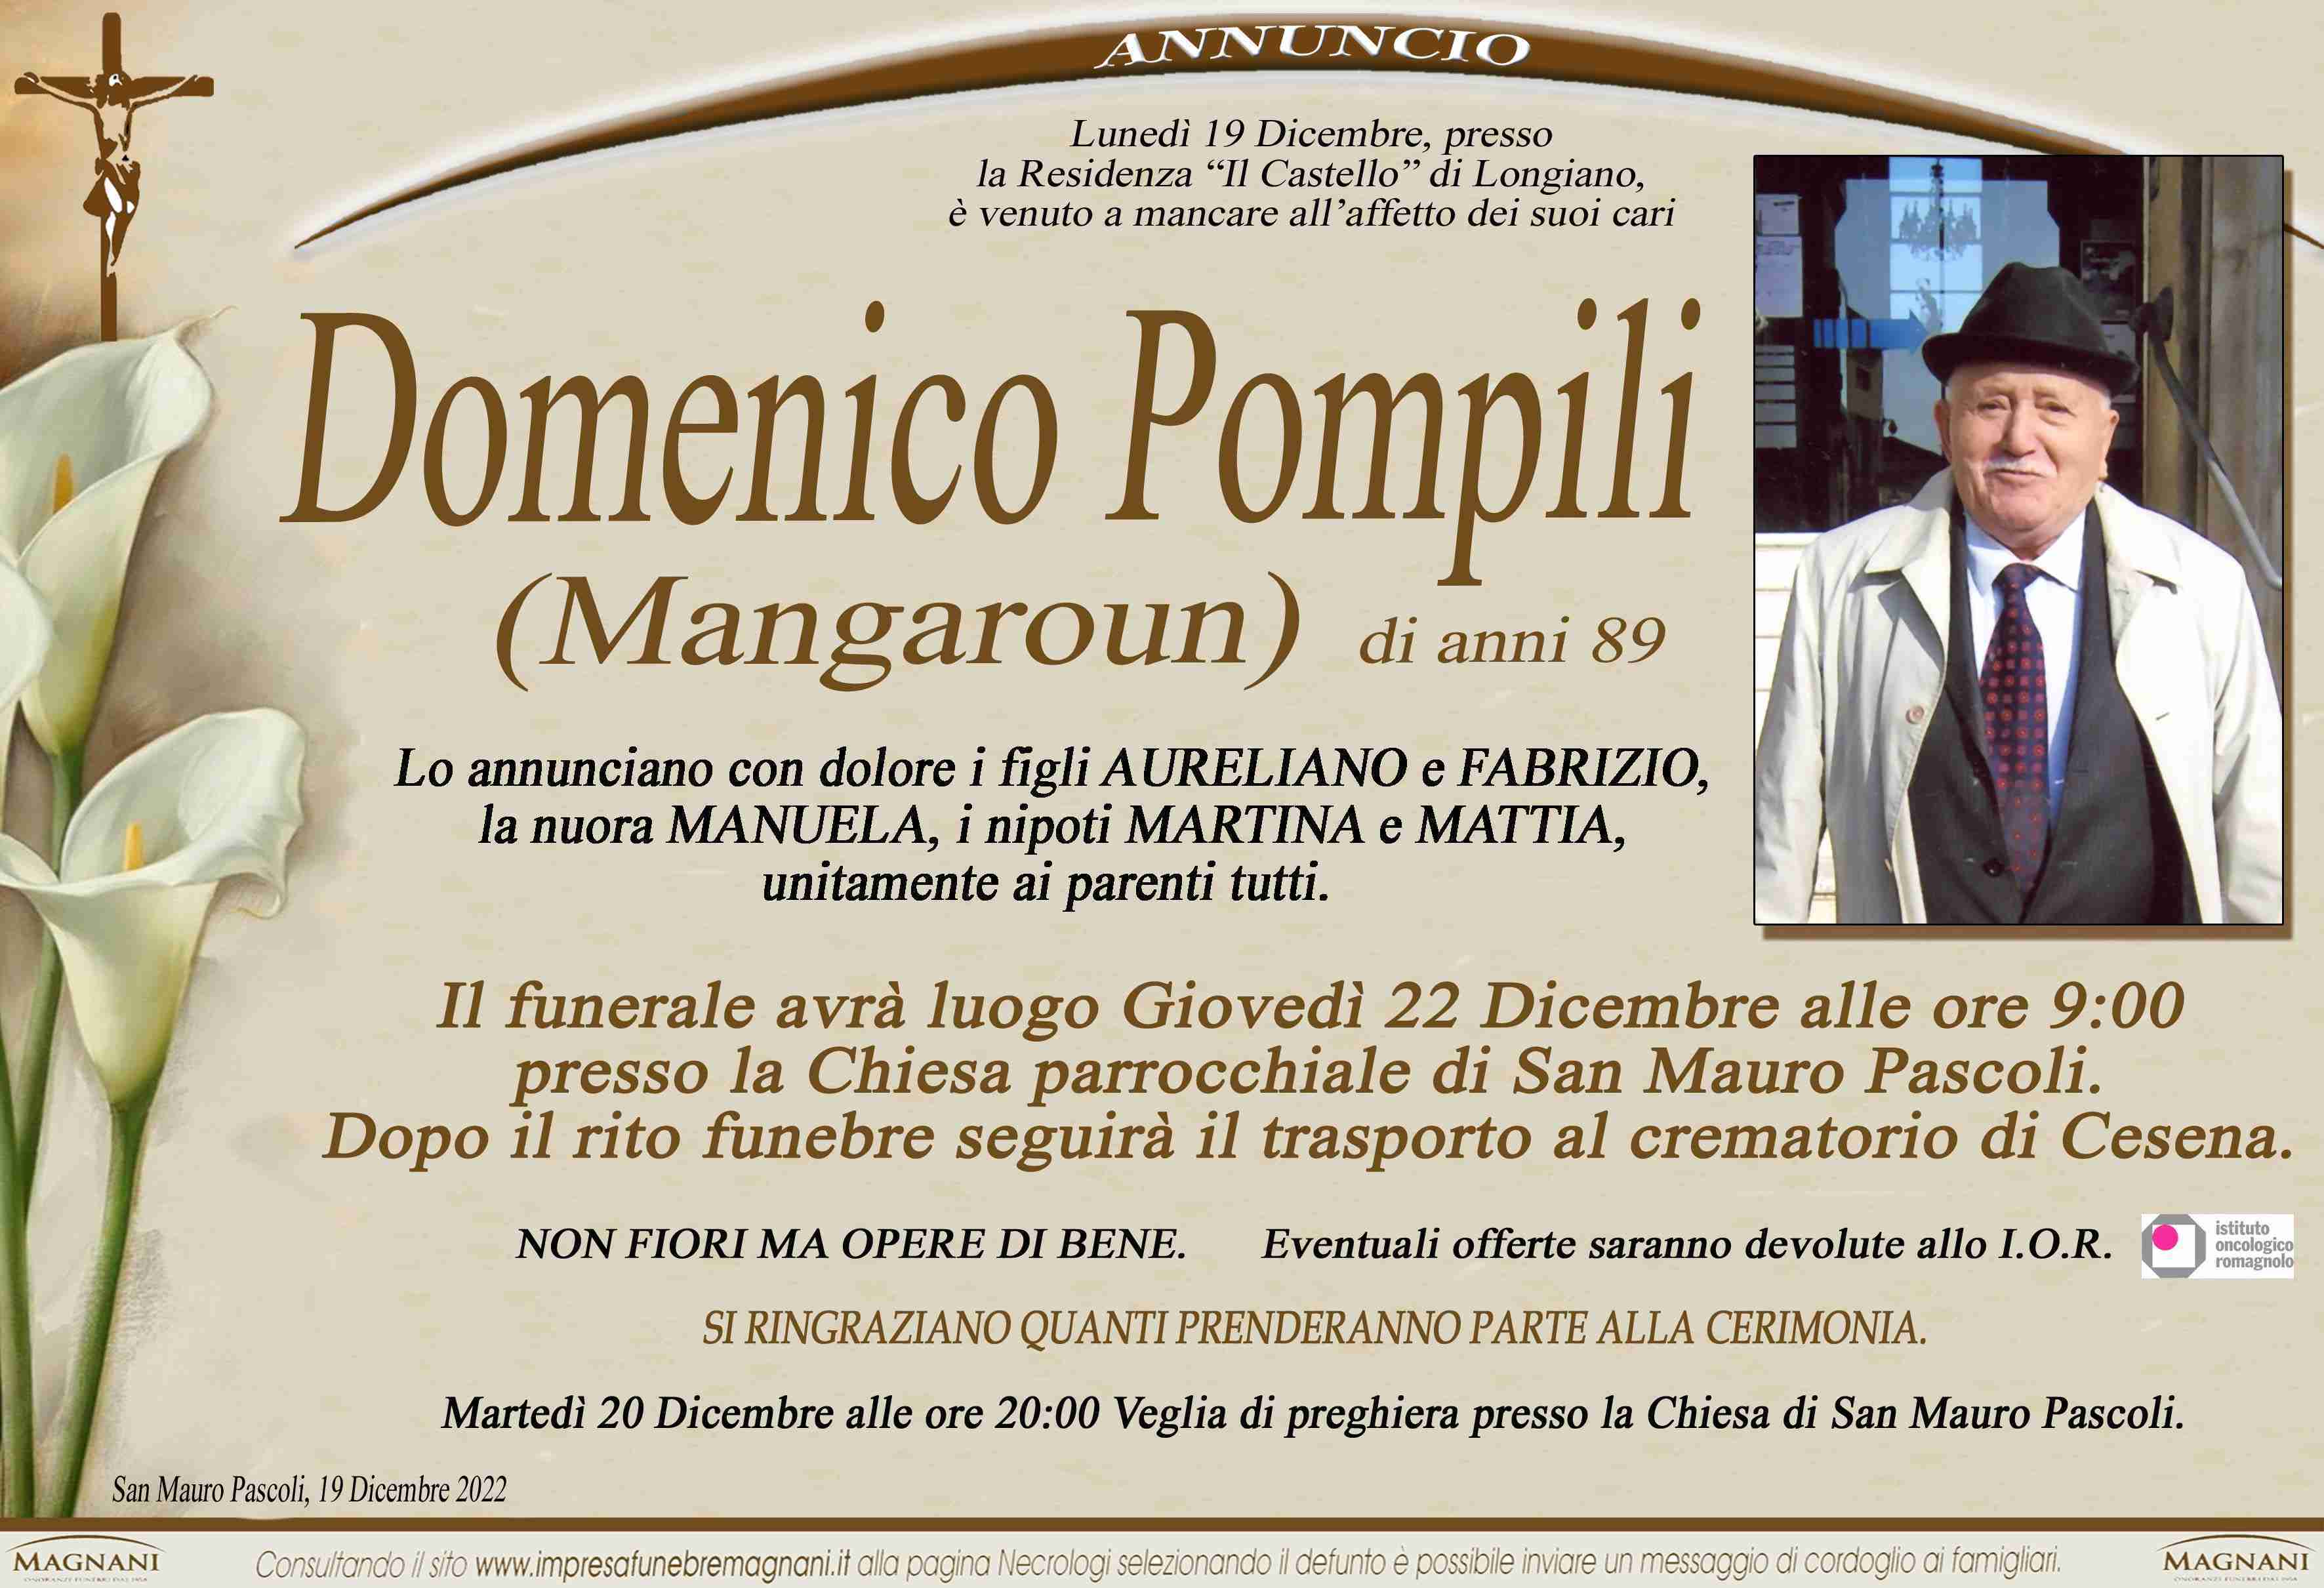 Domenico Pompili (Mangaroun)